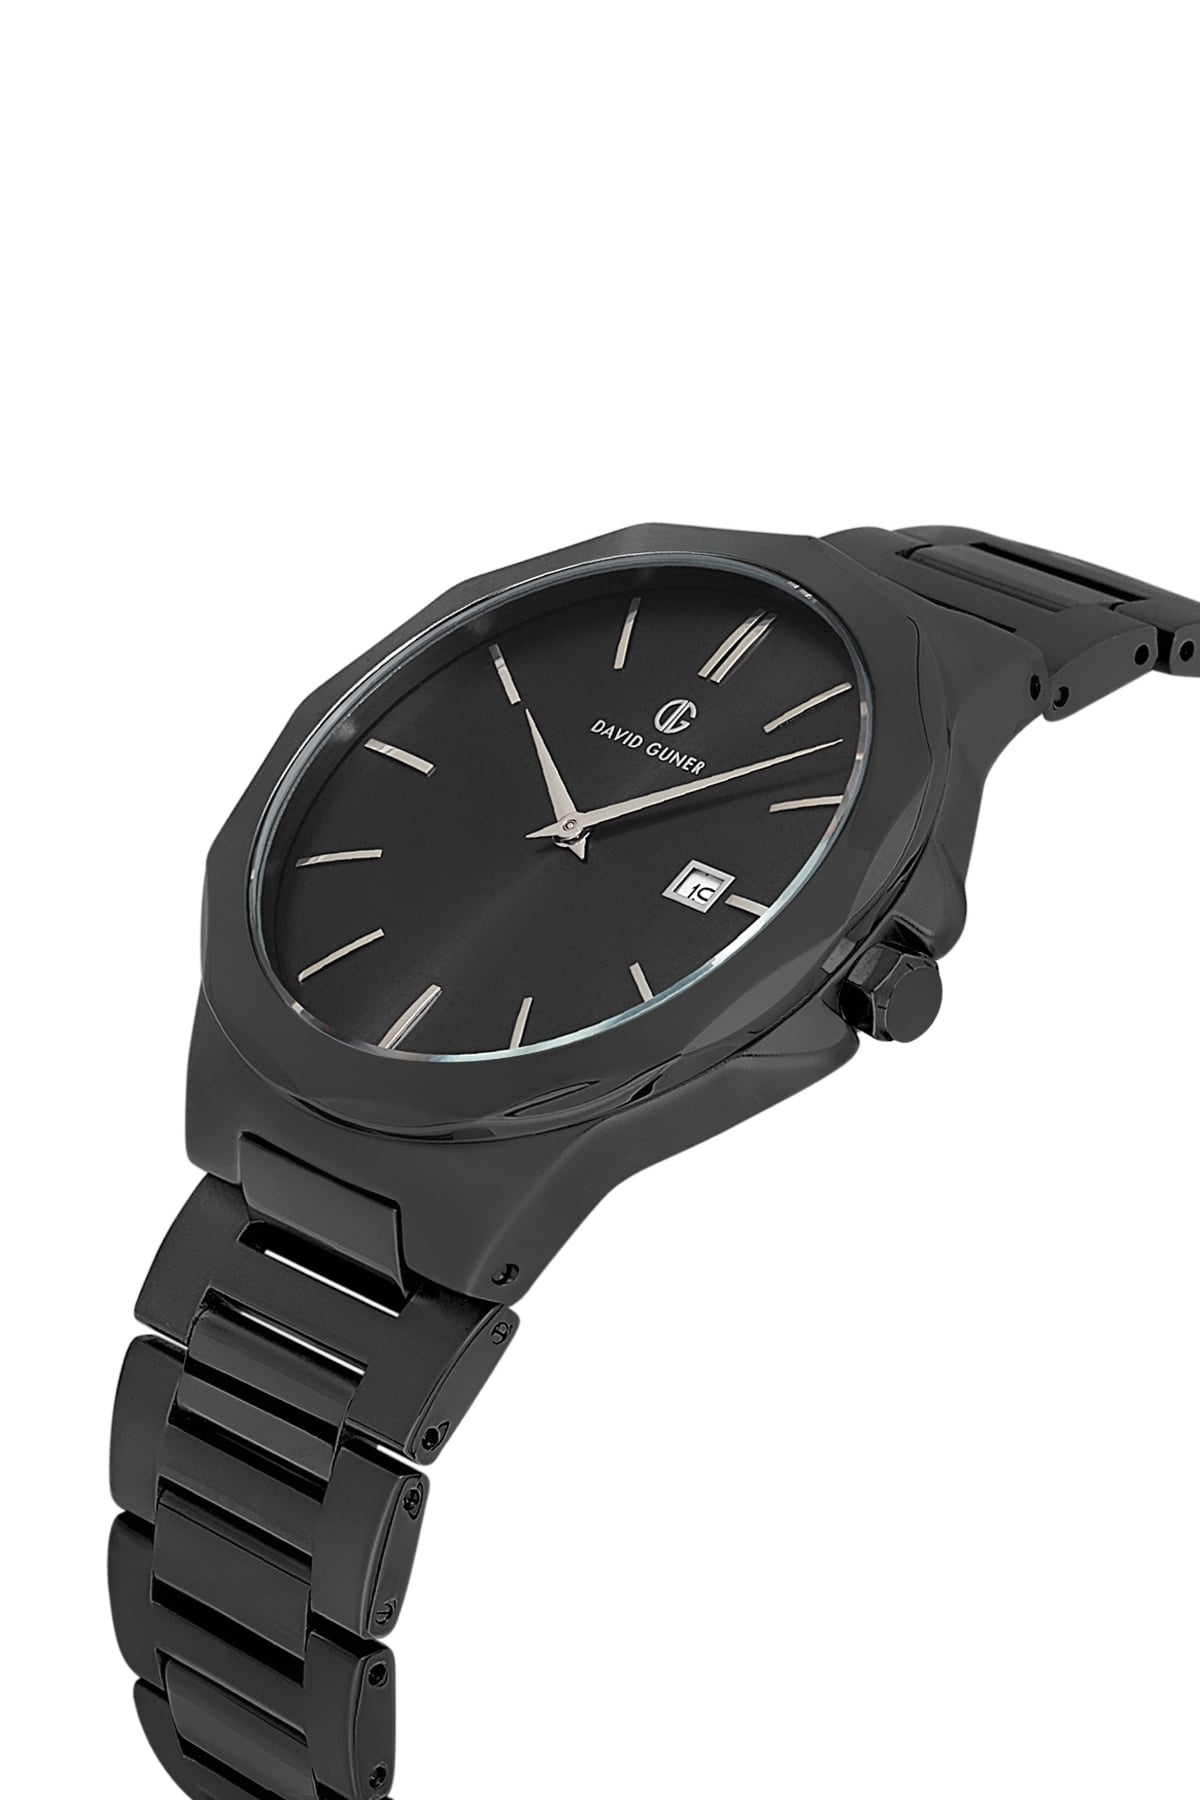 DAVID GUNER Men's Wristwatch with Black Dial and Black Coated Calendar